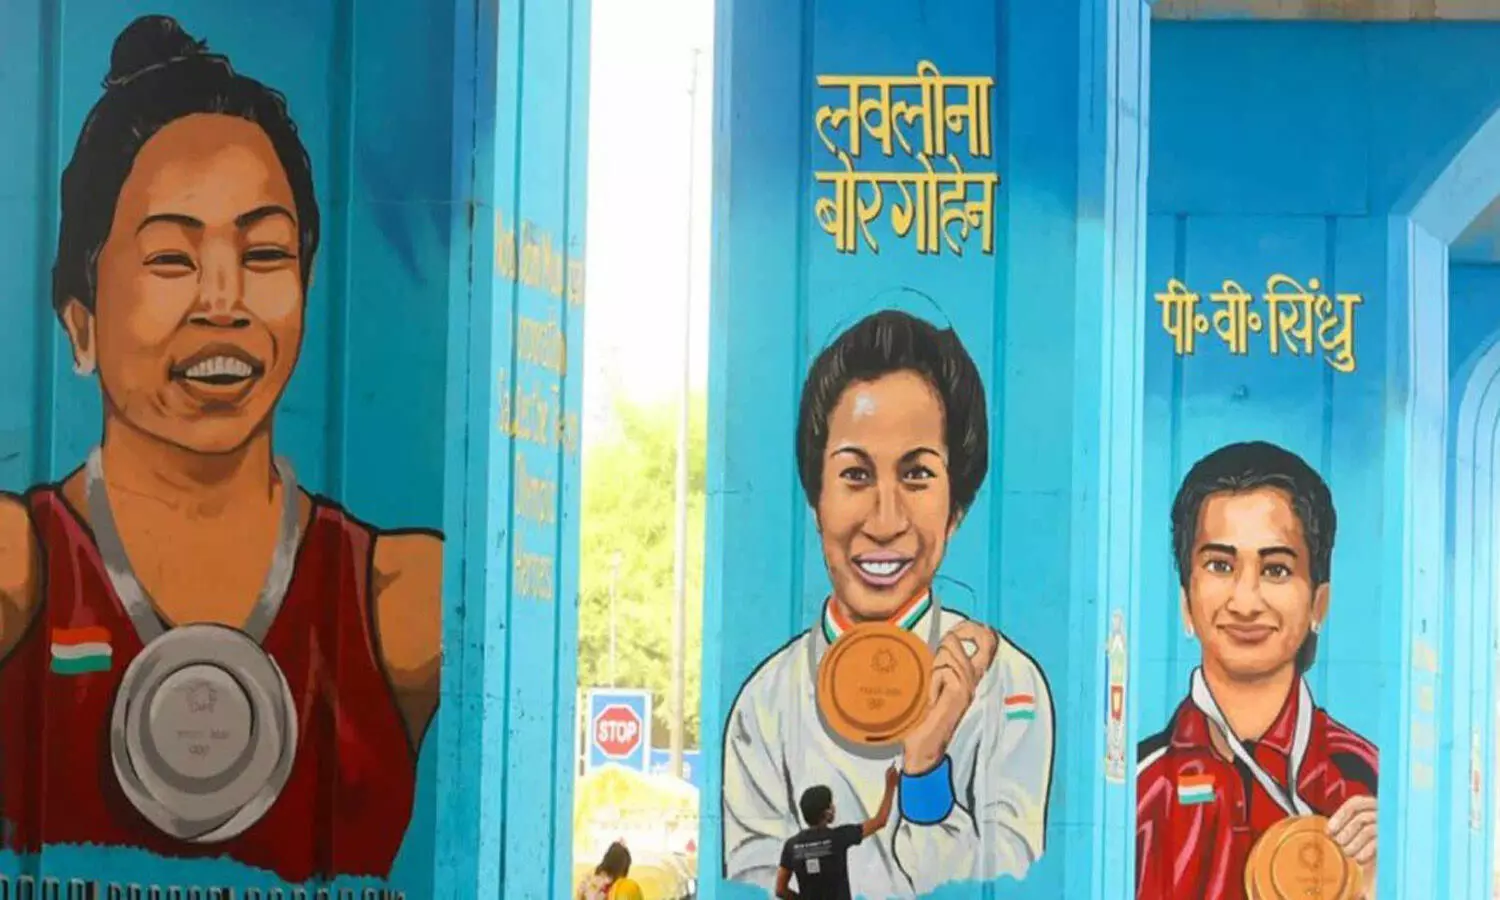 Delhi Metro pillars beautified with graffiti of Olympic medalists